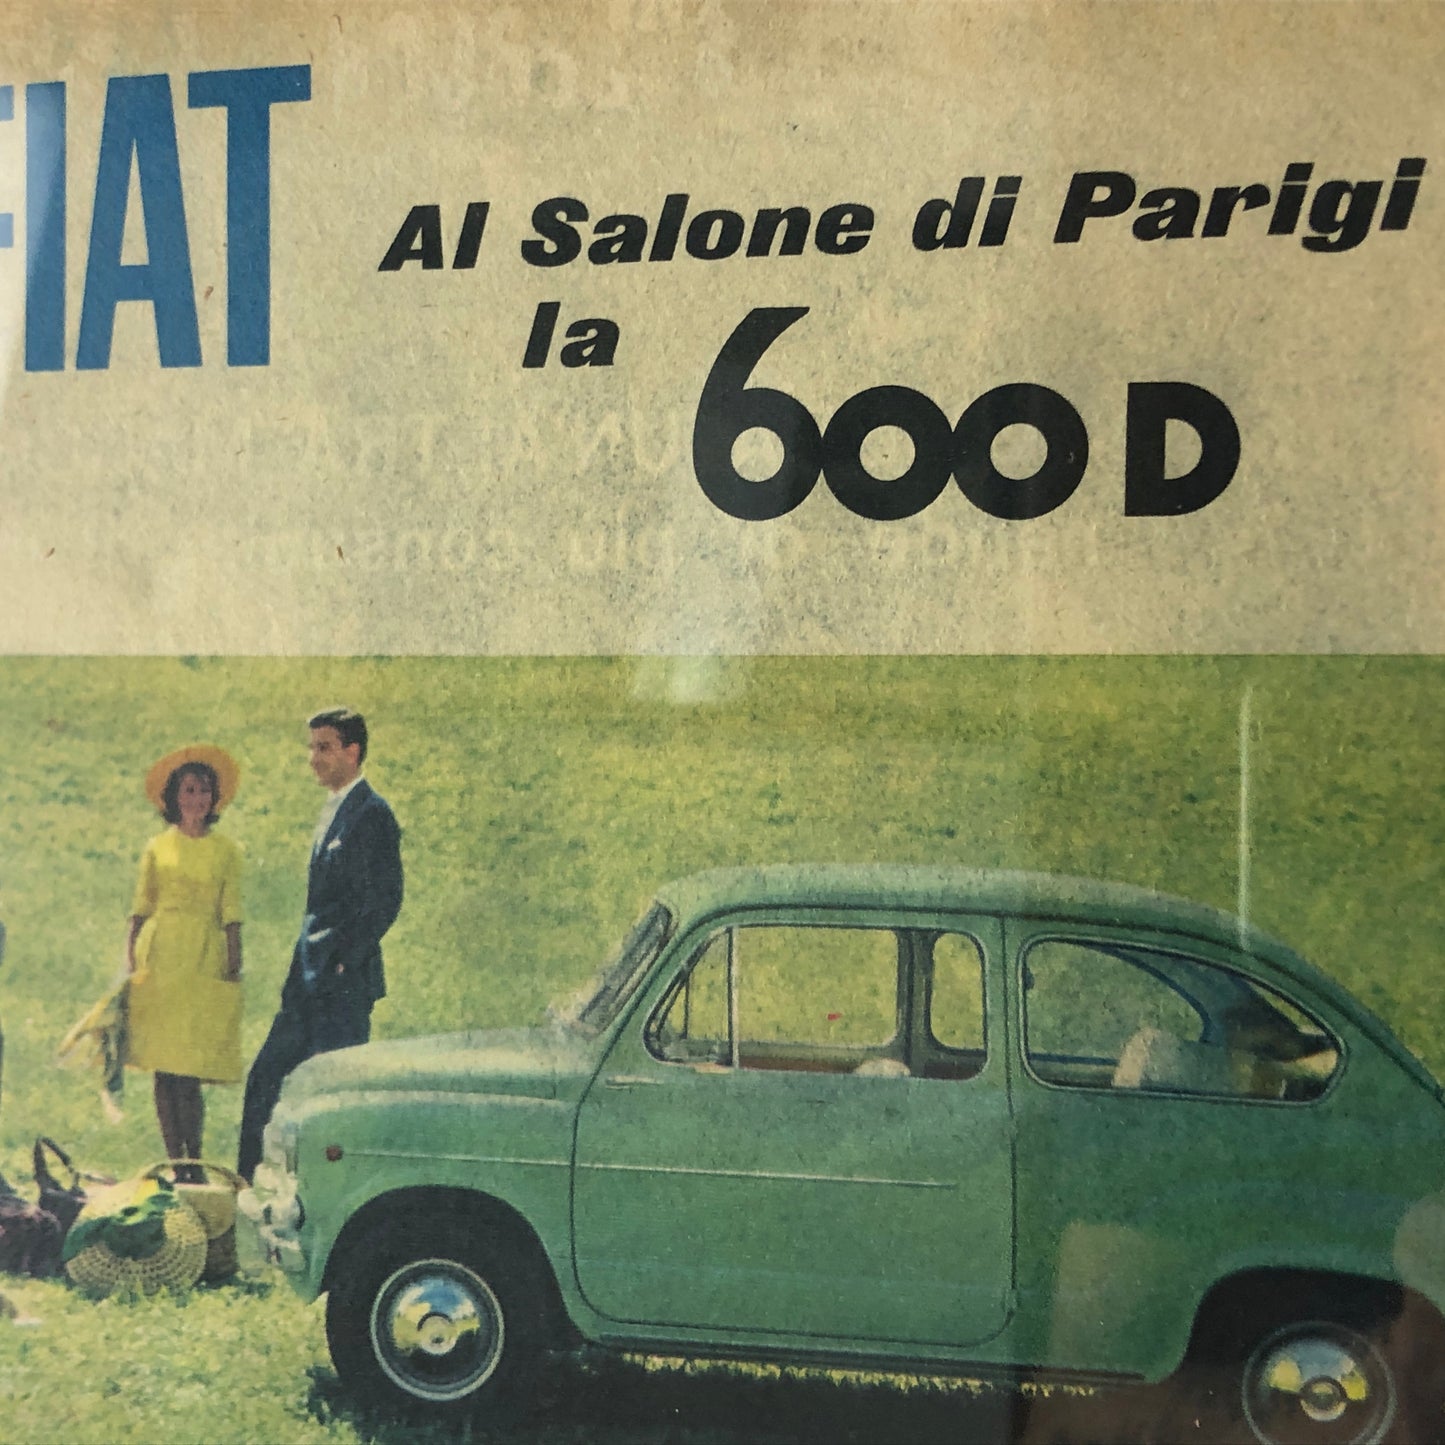 FIAT, Advertising Year 1960 FIAT 600 D Paris Motor Show